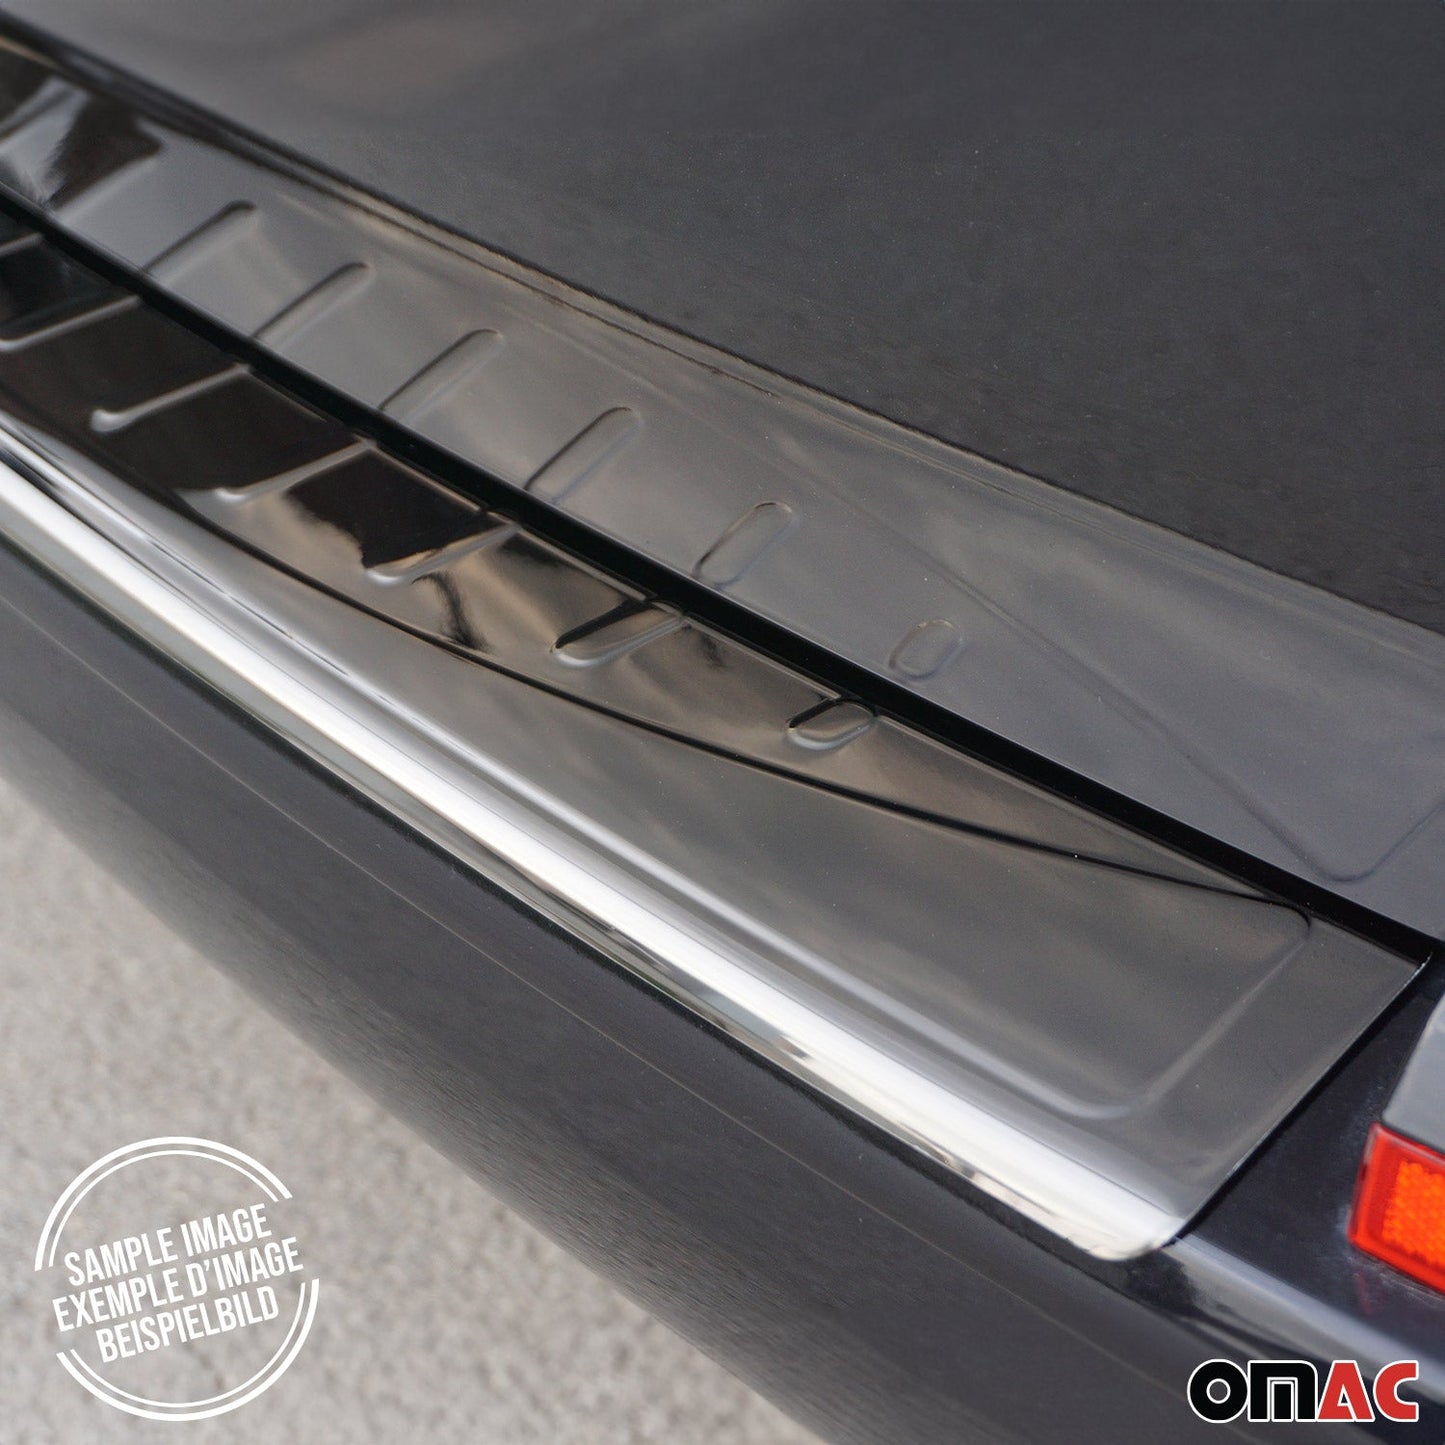 OMAC Rear Bumper Sill Cover Protector for VW Passat B7 2012-2014 Wagon Steel Dark 1Pc 7538095B